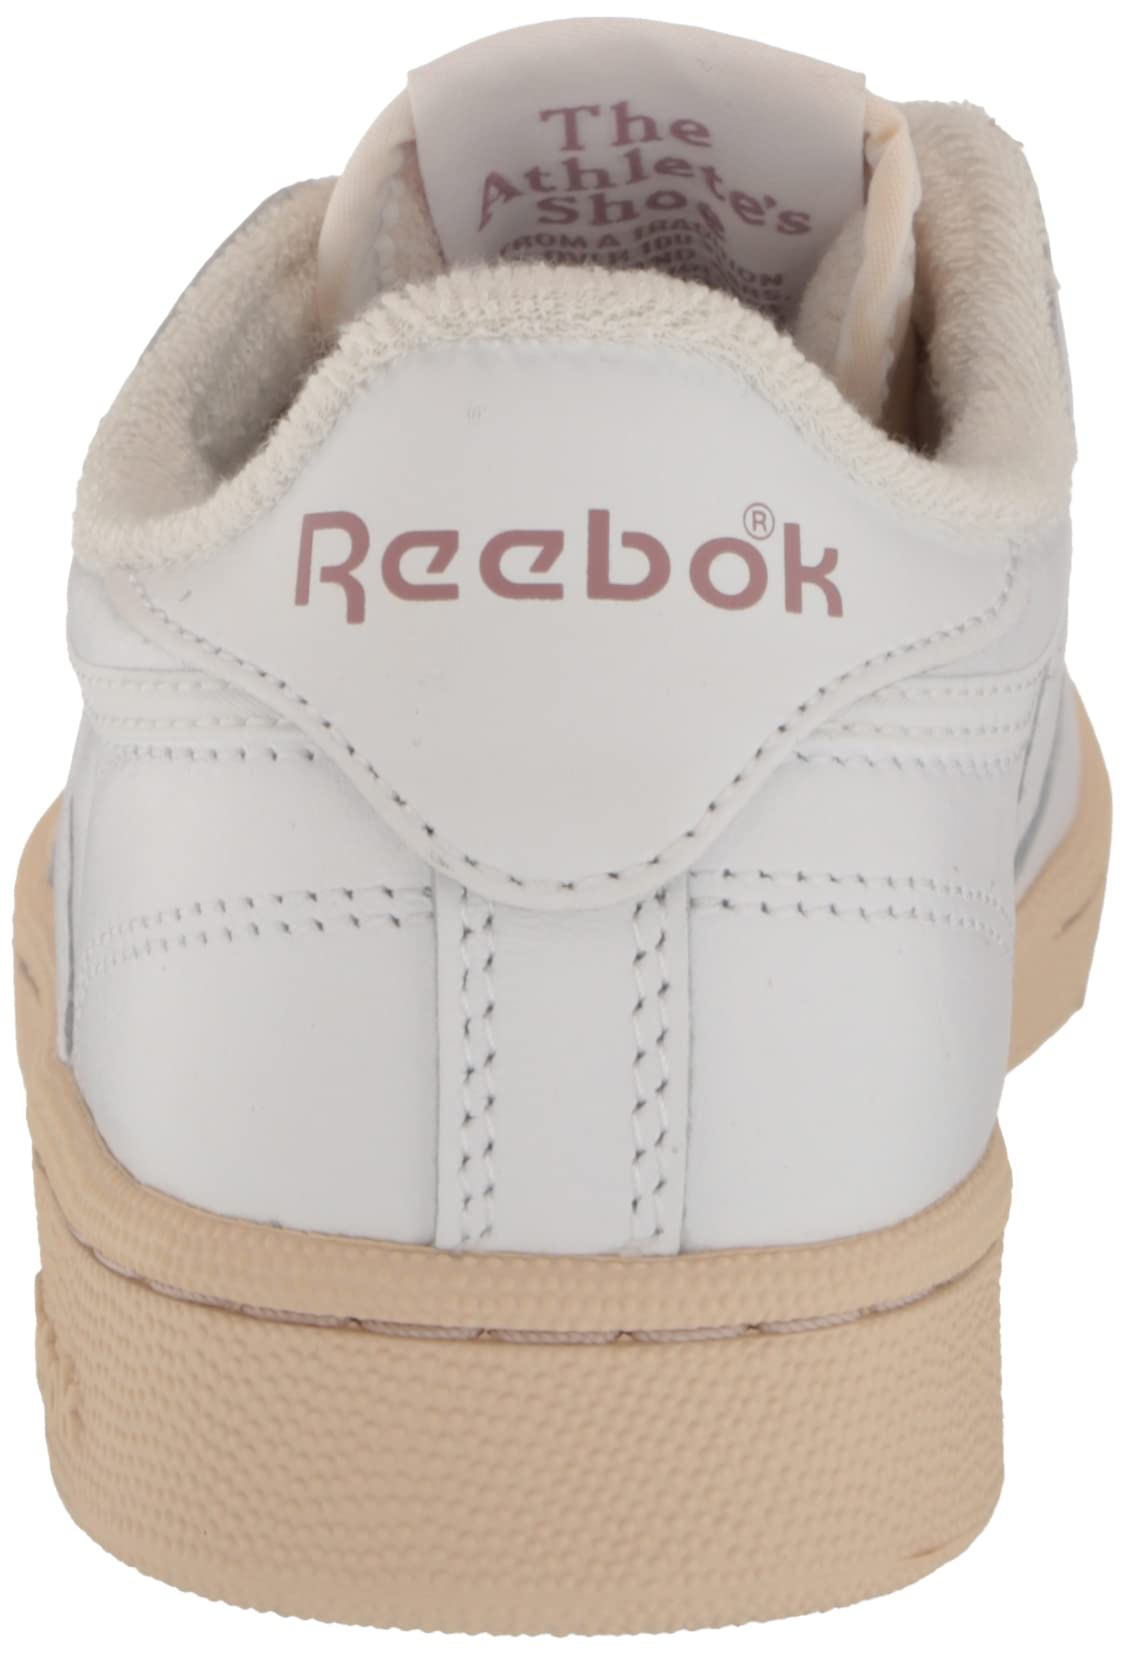 Reebok Women's Club C 85 Vintage Sneaker, White/Chalk/Infused Lilac, 6